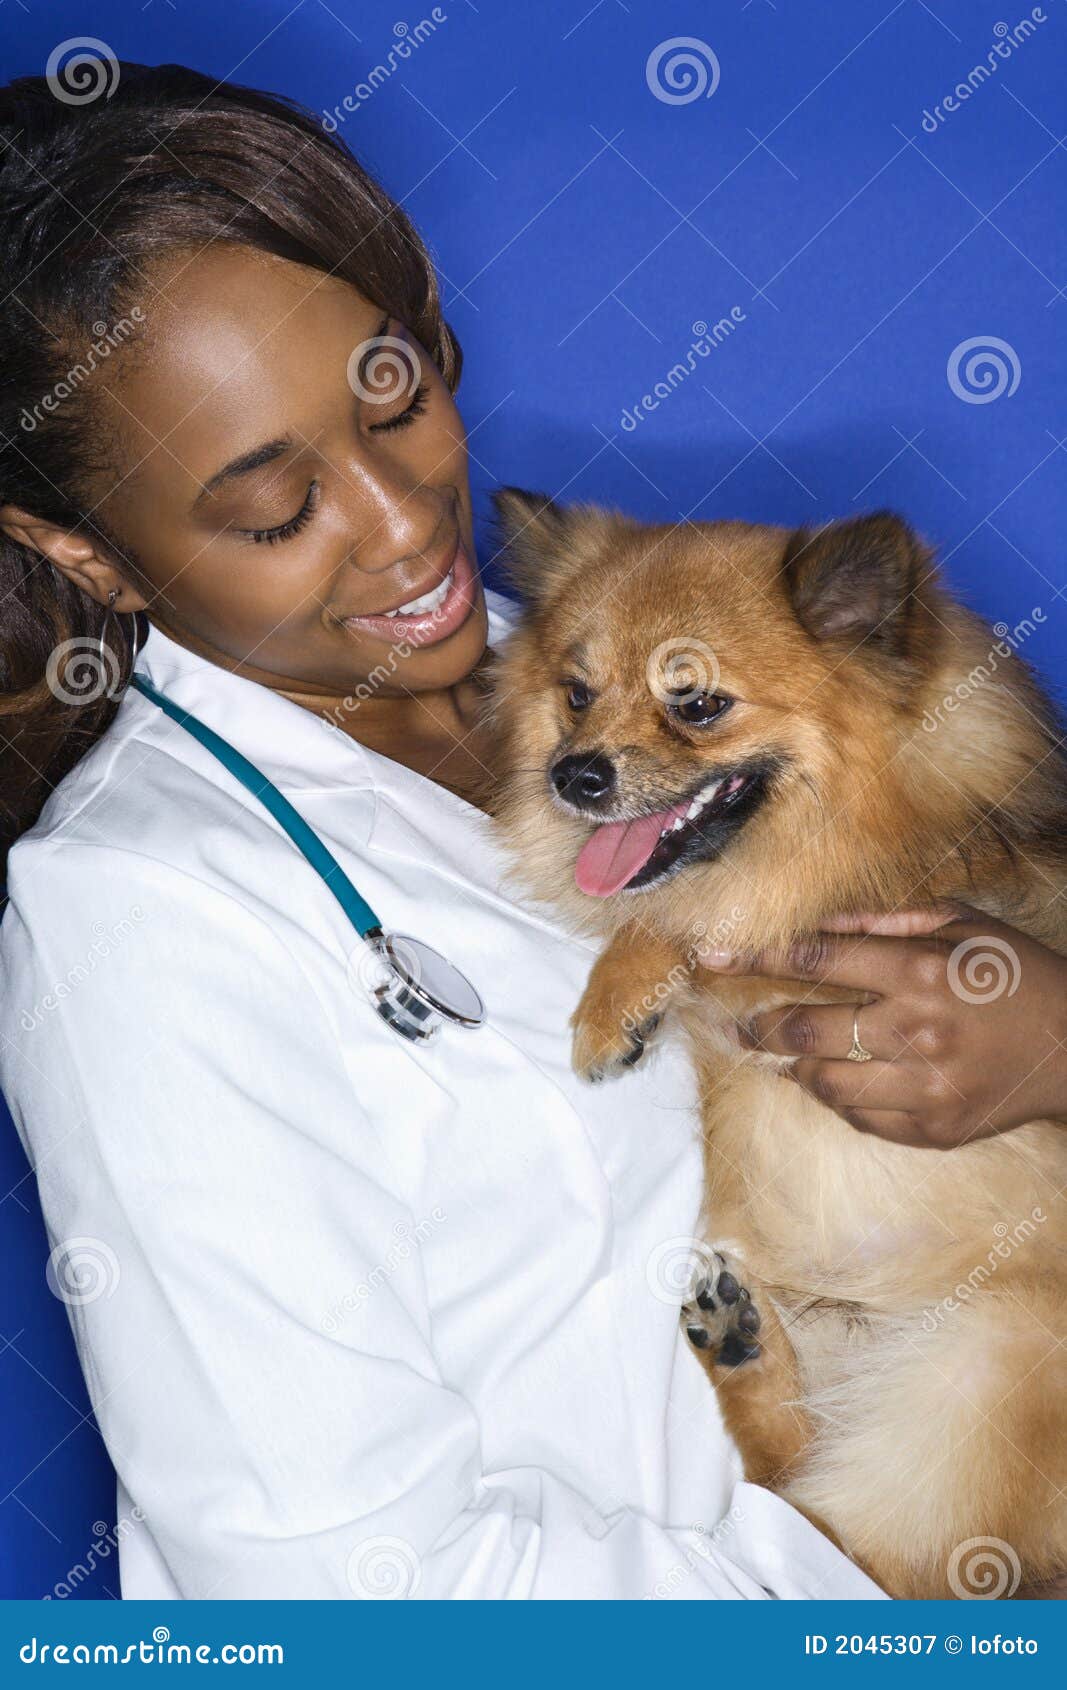 woman veterinarian holding dog